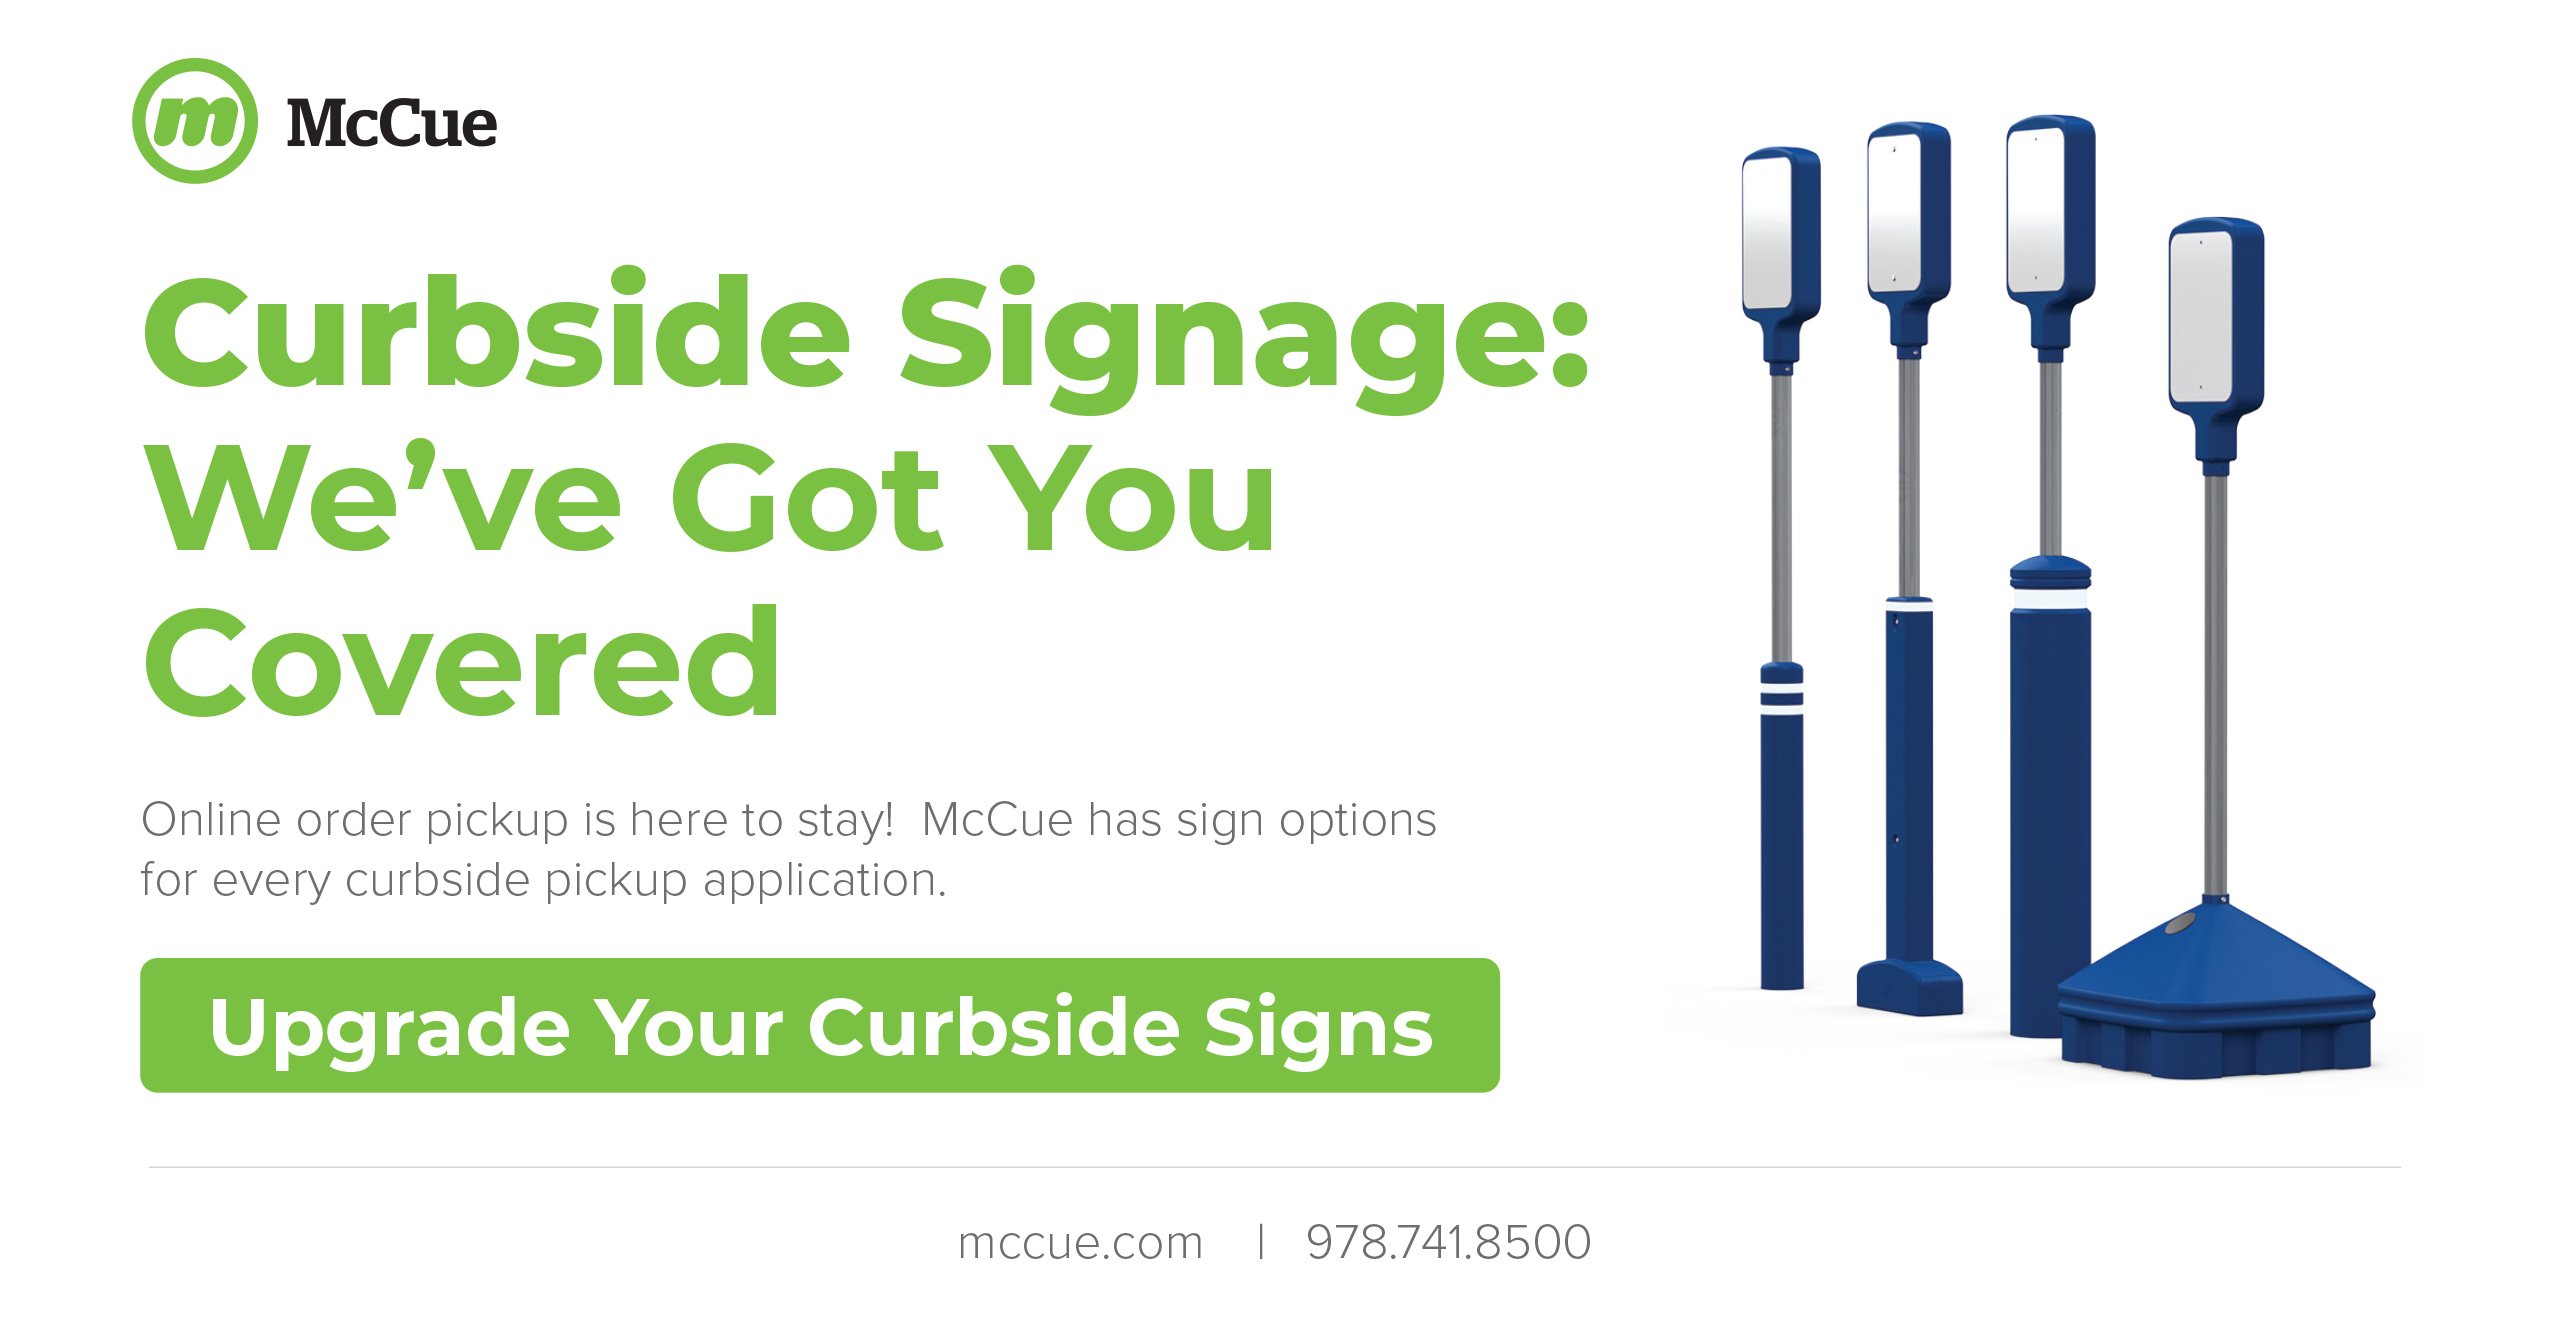 McCue Curbside Signage